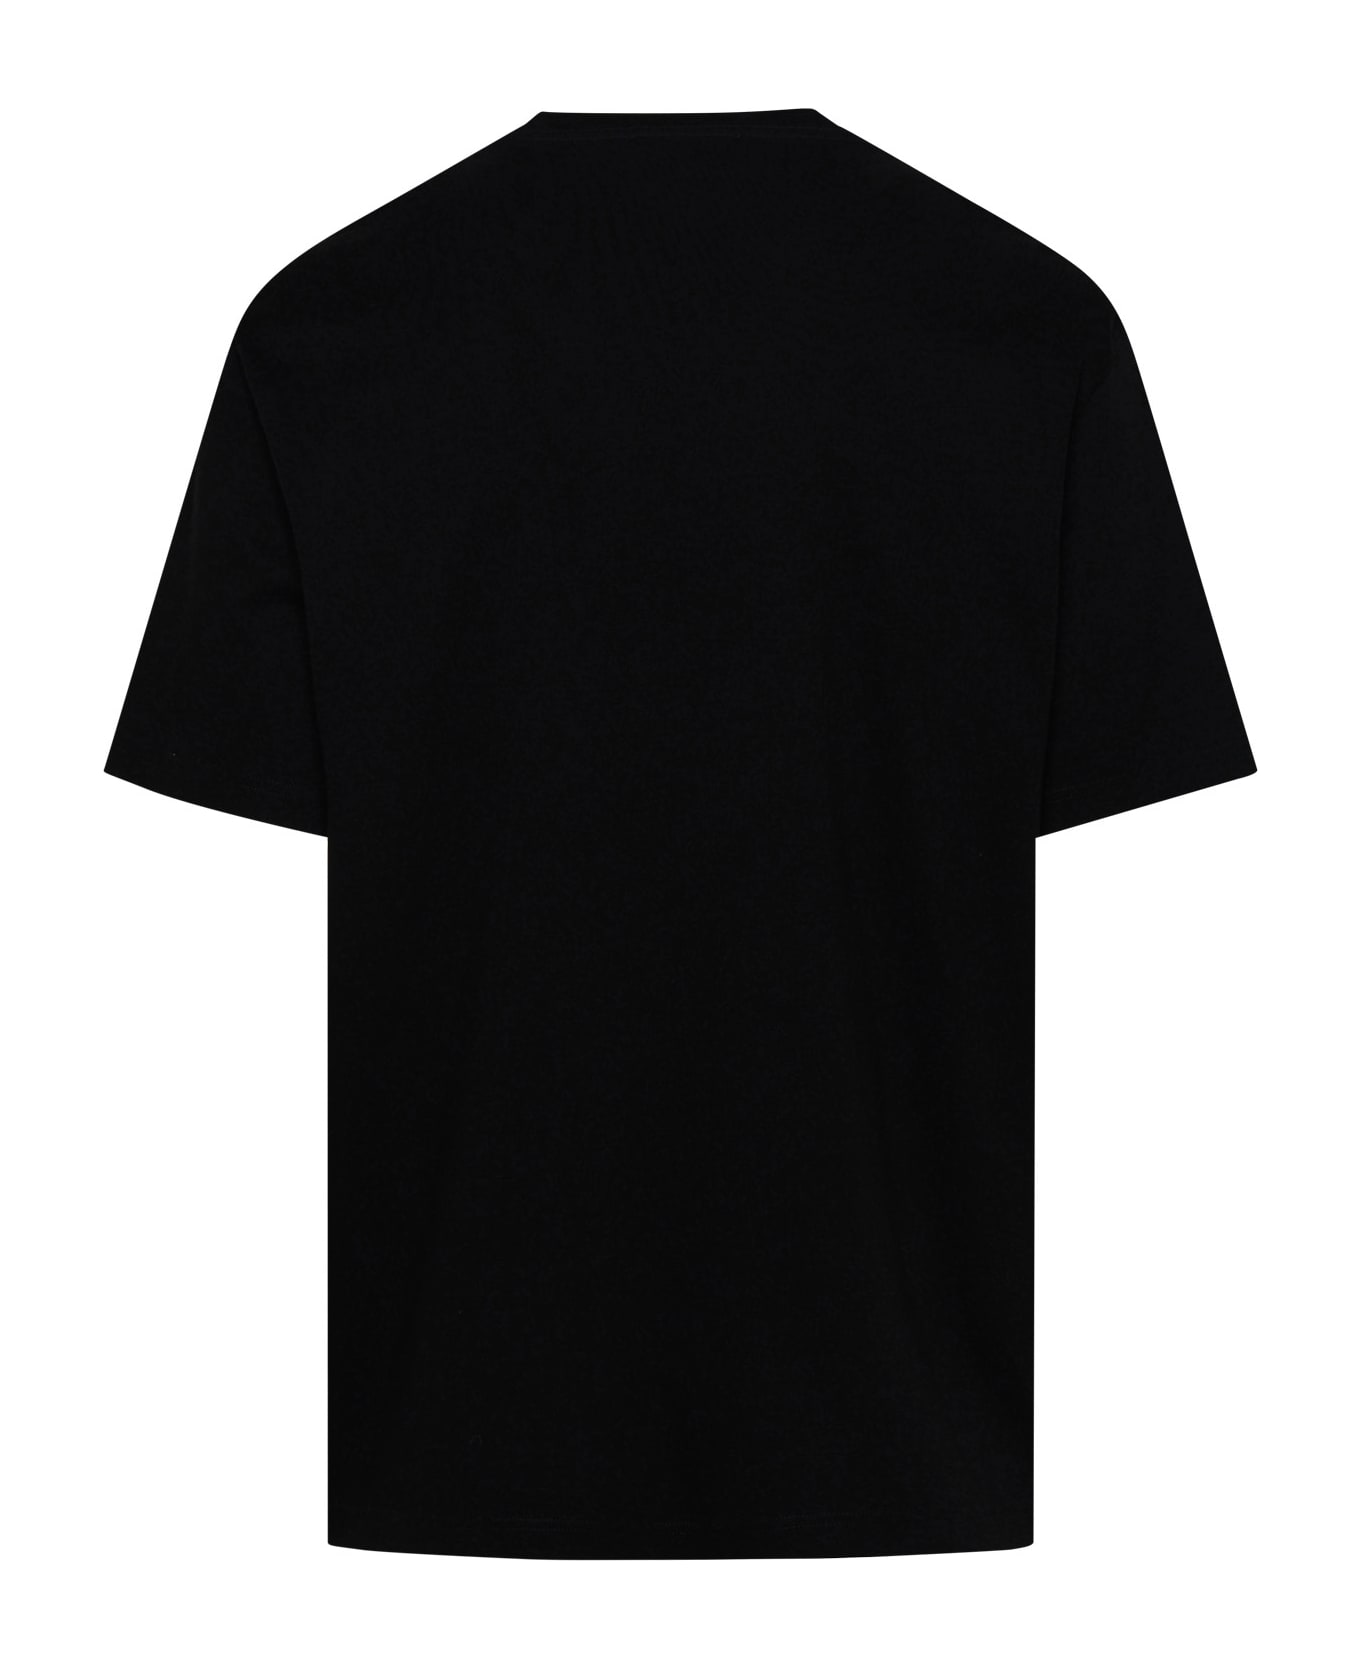 Lanvin Black Cotton T-shirt - Black シャツ